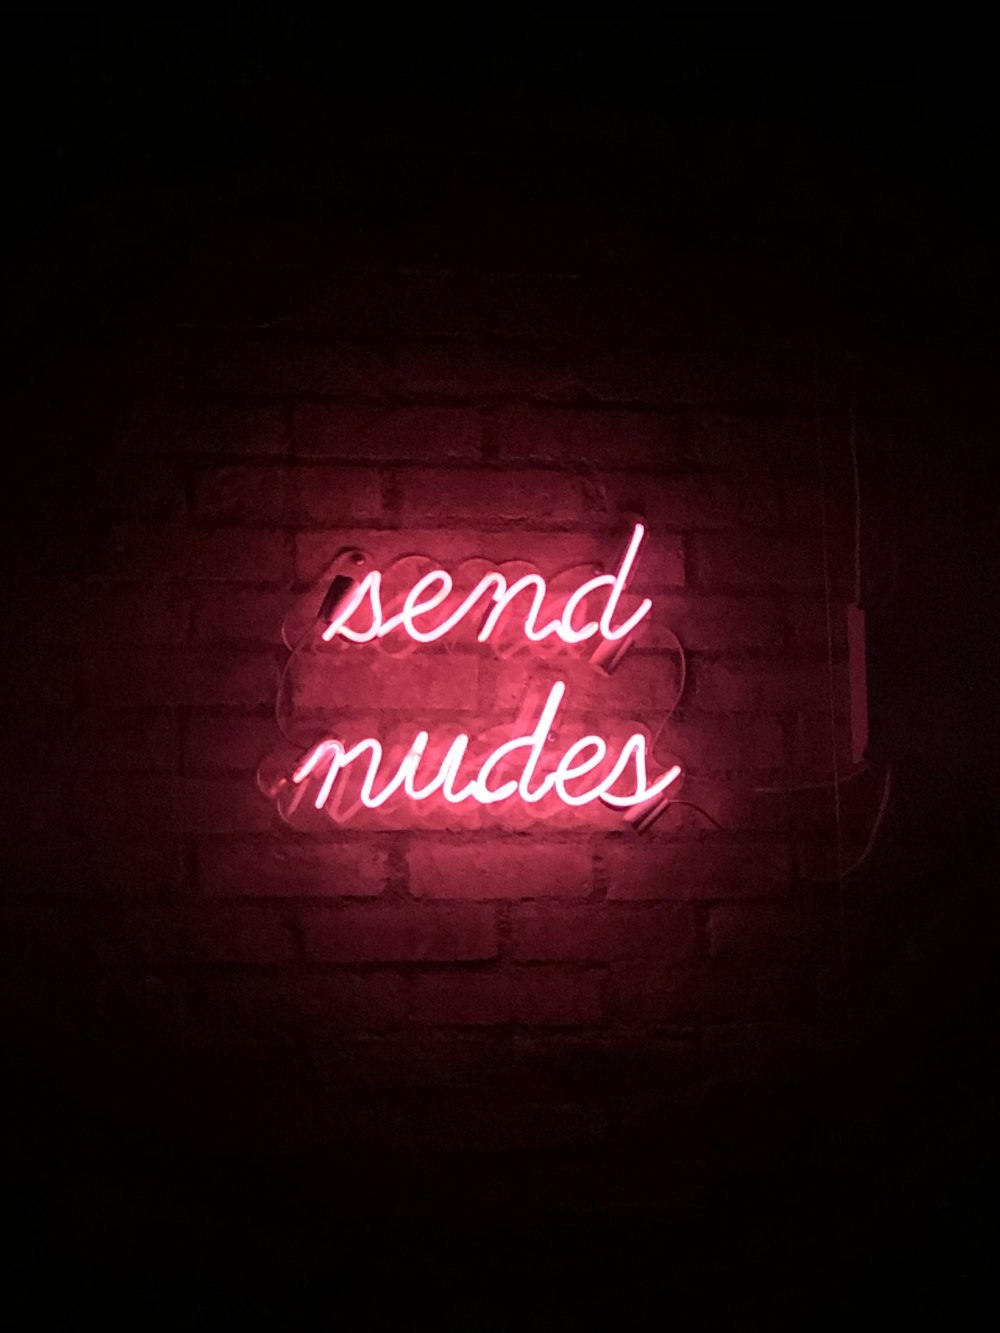 send nudes neon signage photo – Free Neon Image on Unsplash